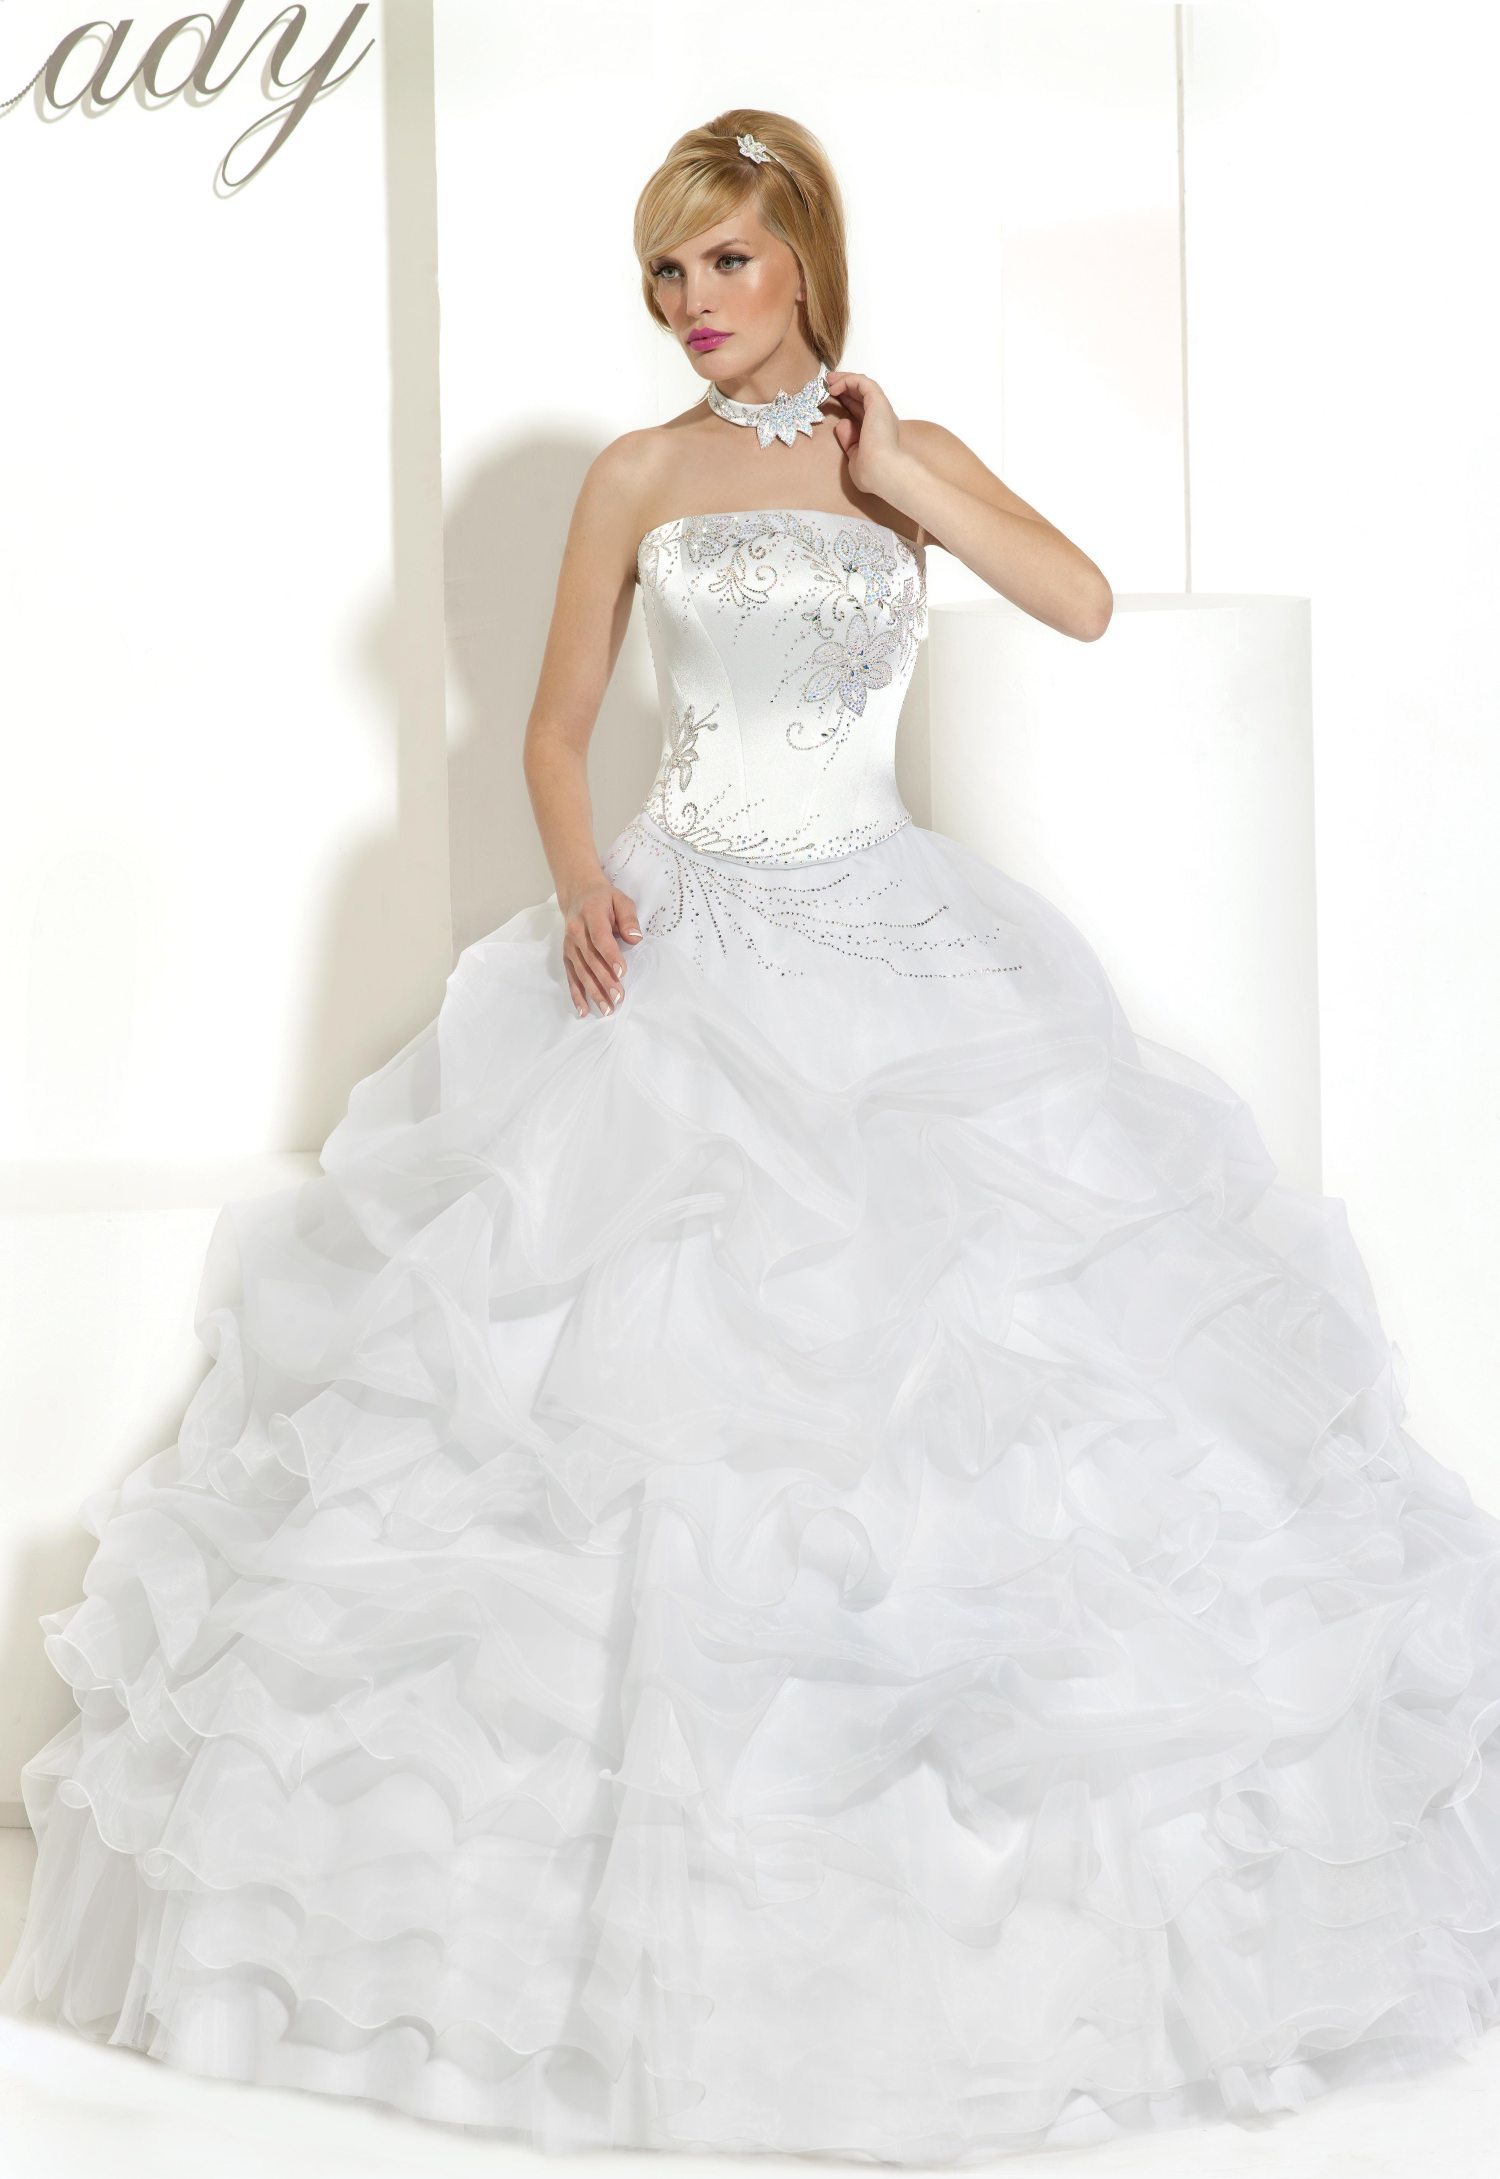 Wedding Dress - Lady Vangie - Lady Vangie Skirt | MyLady Bridal Gown